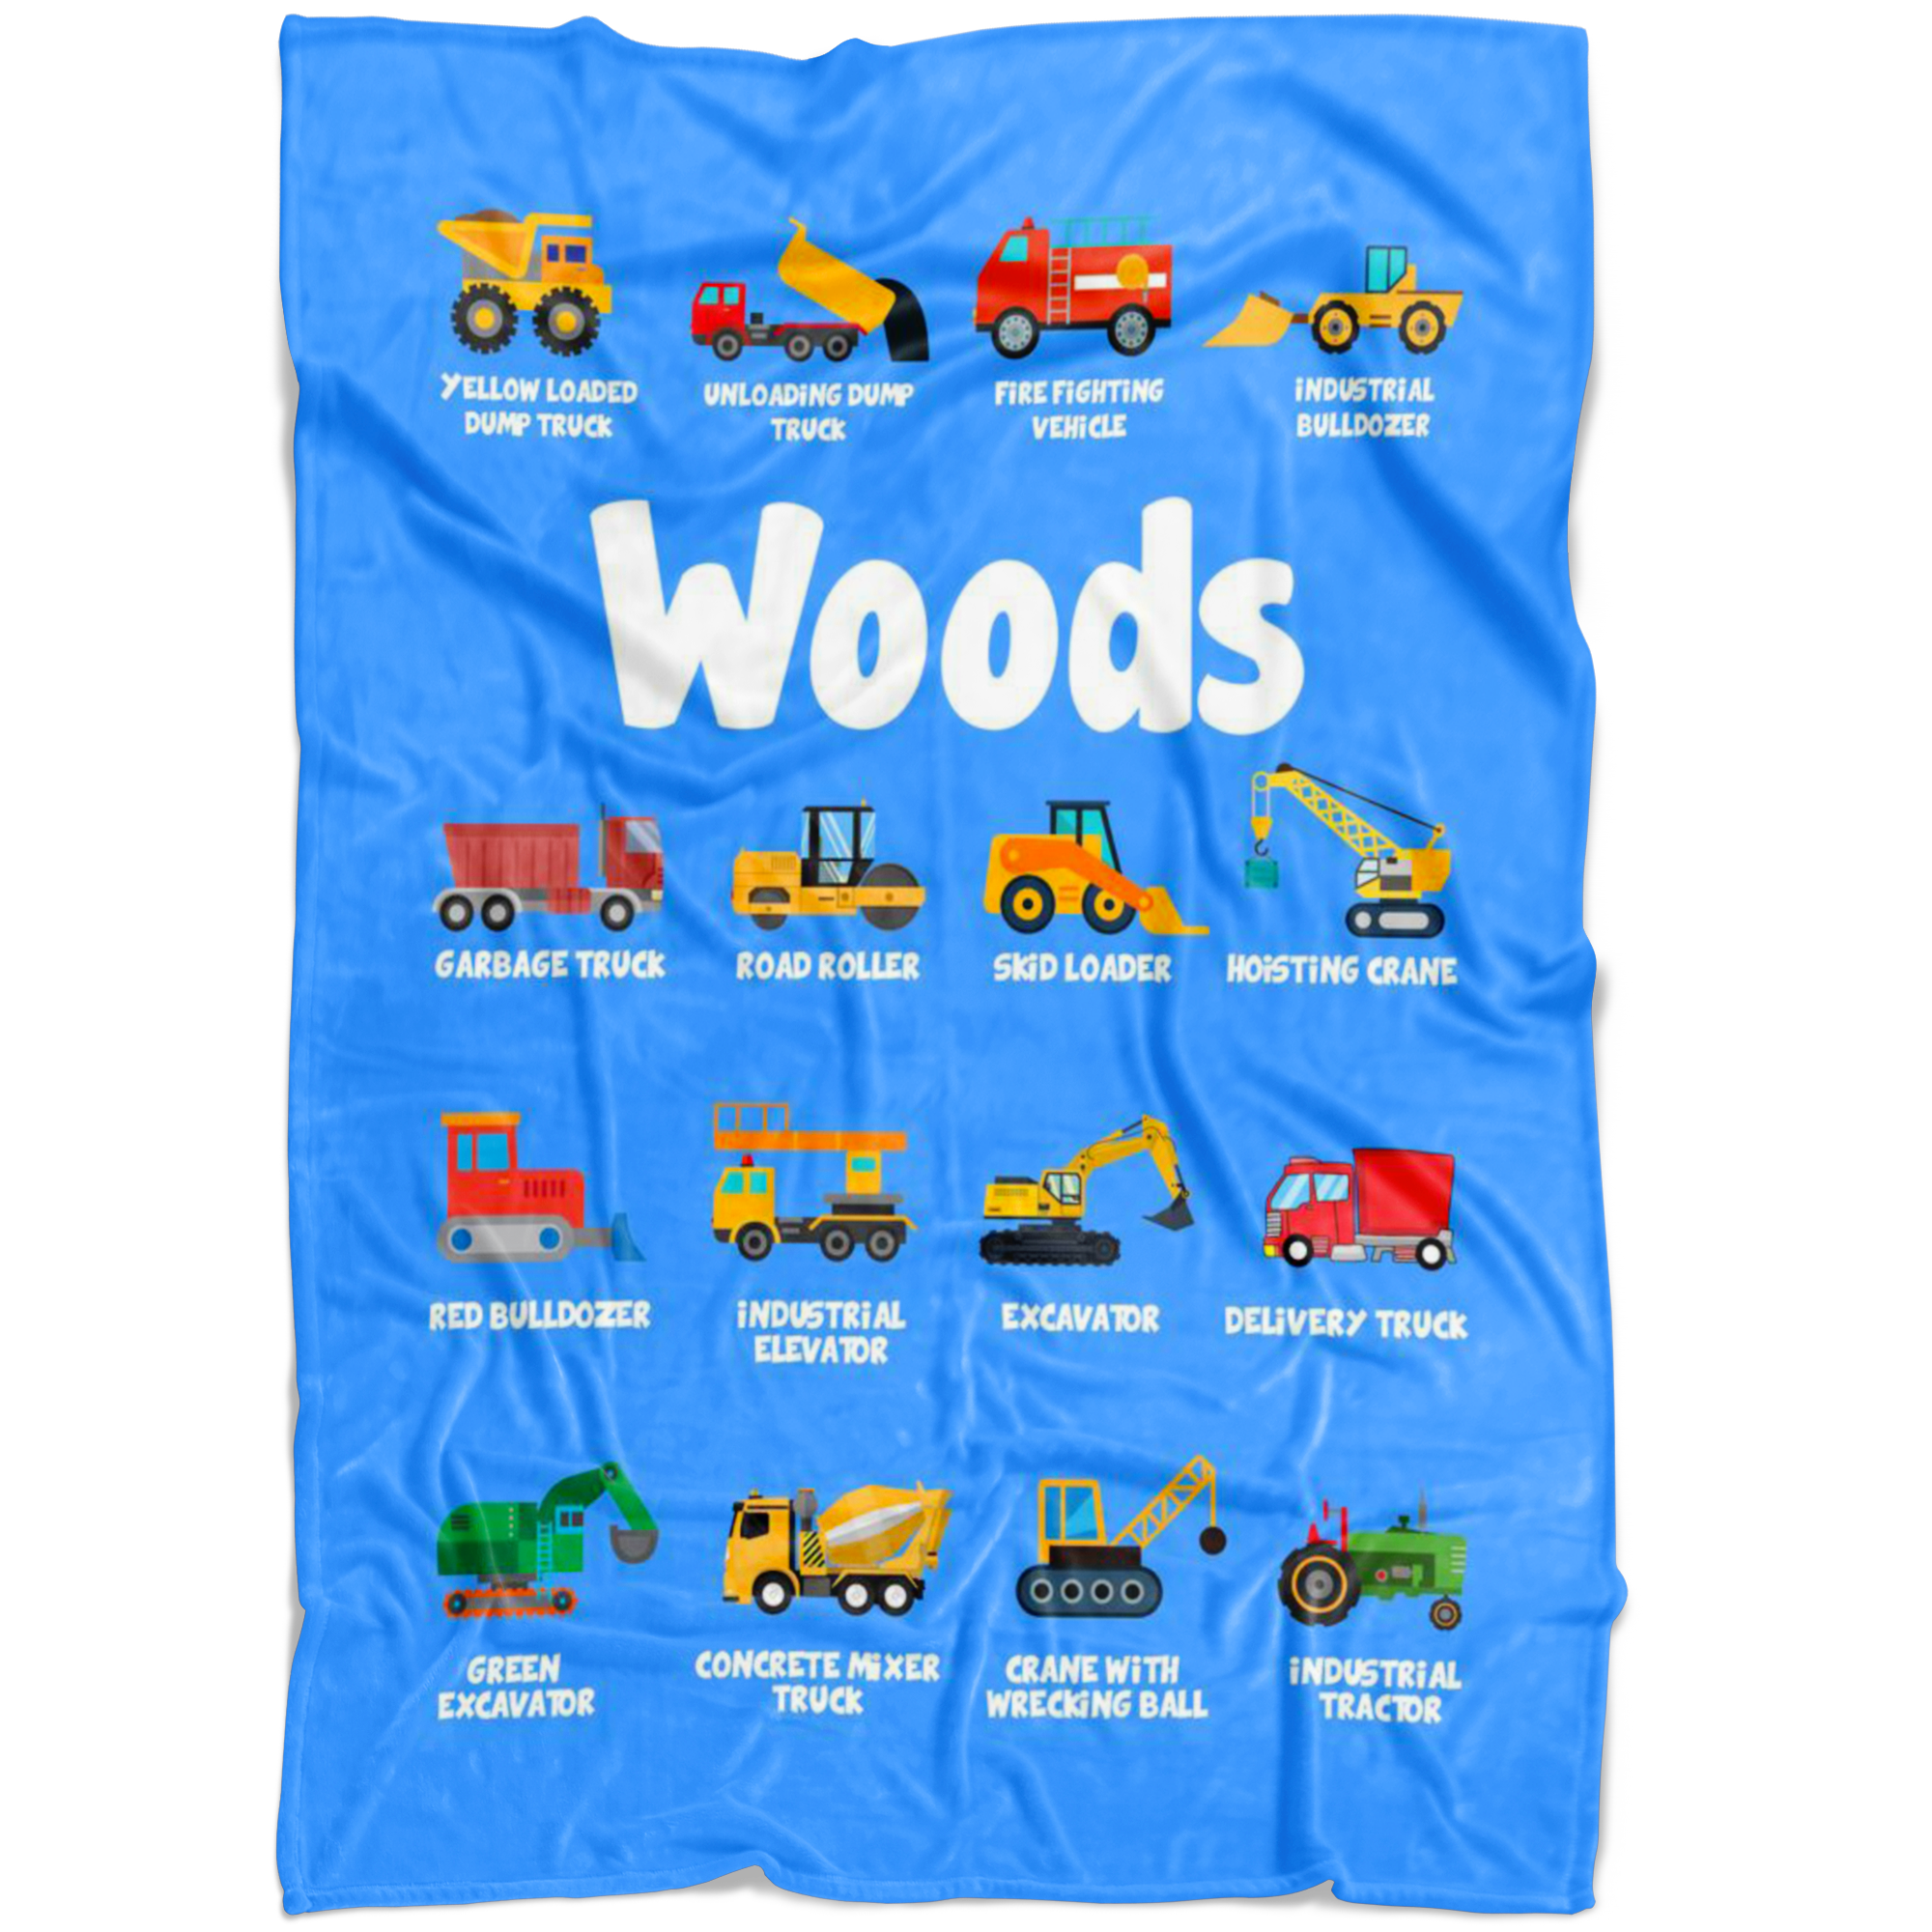 Woods Construction Blanket Blue